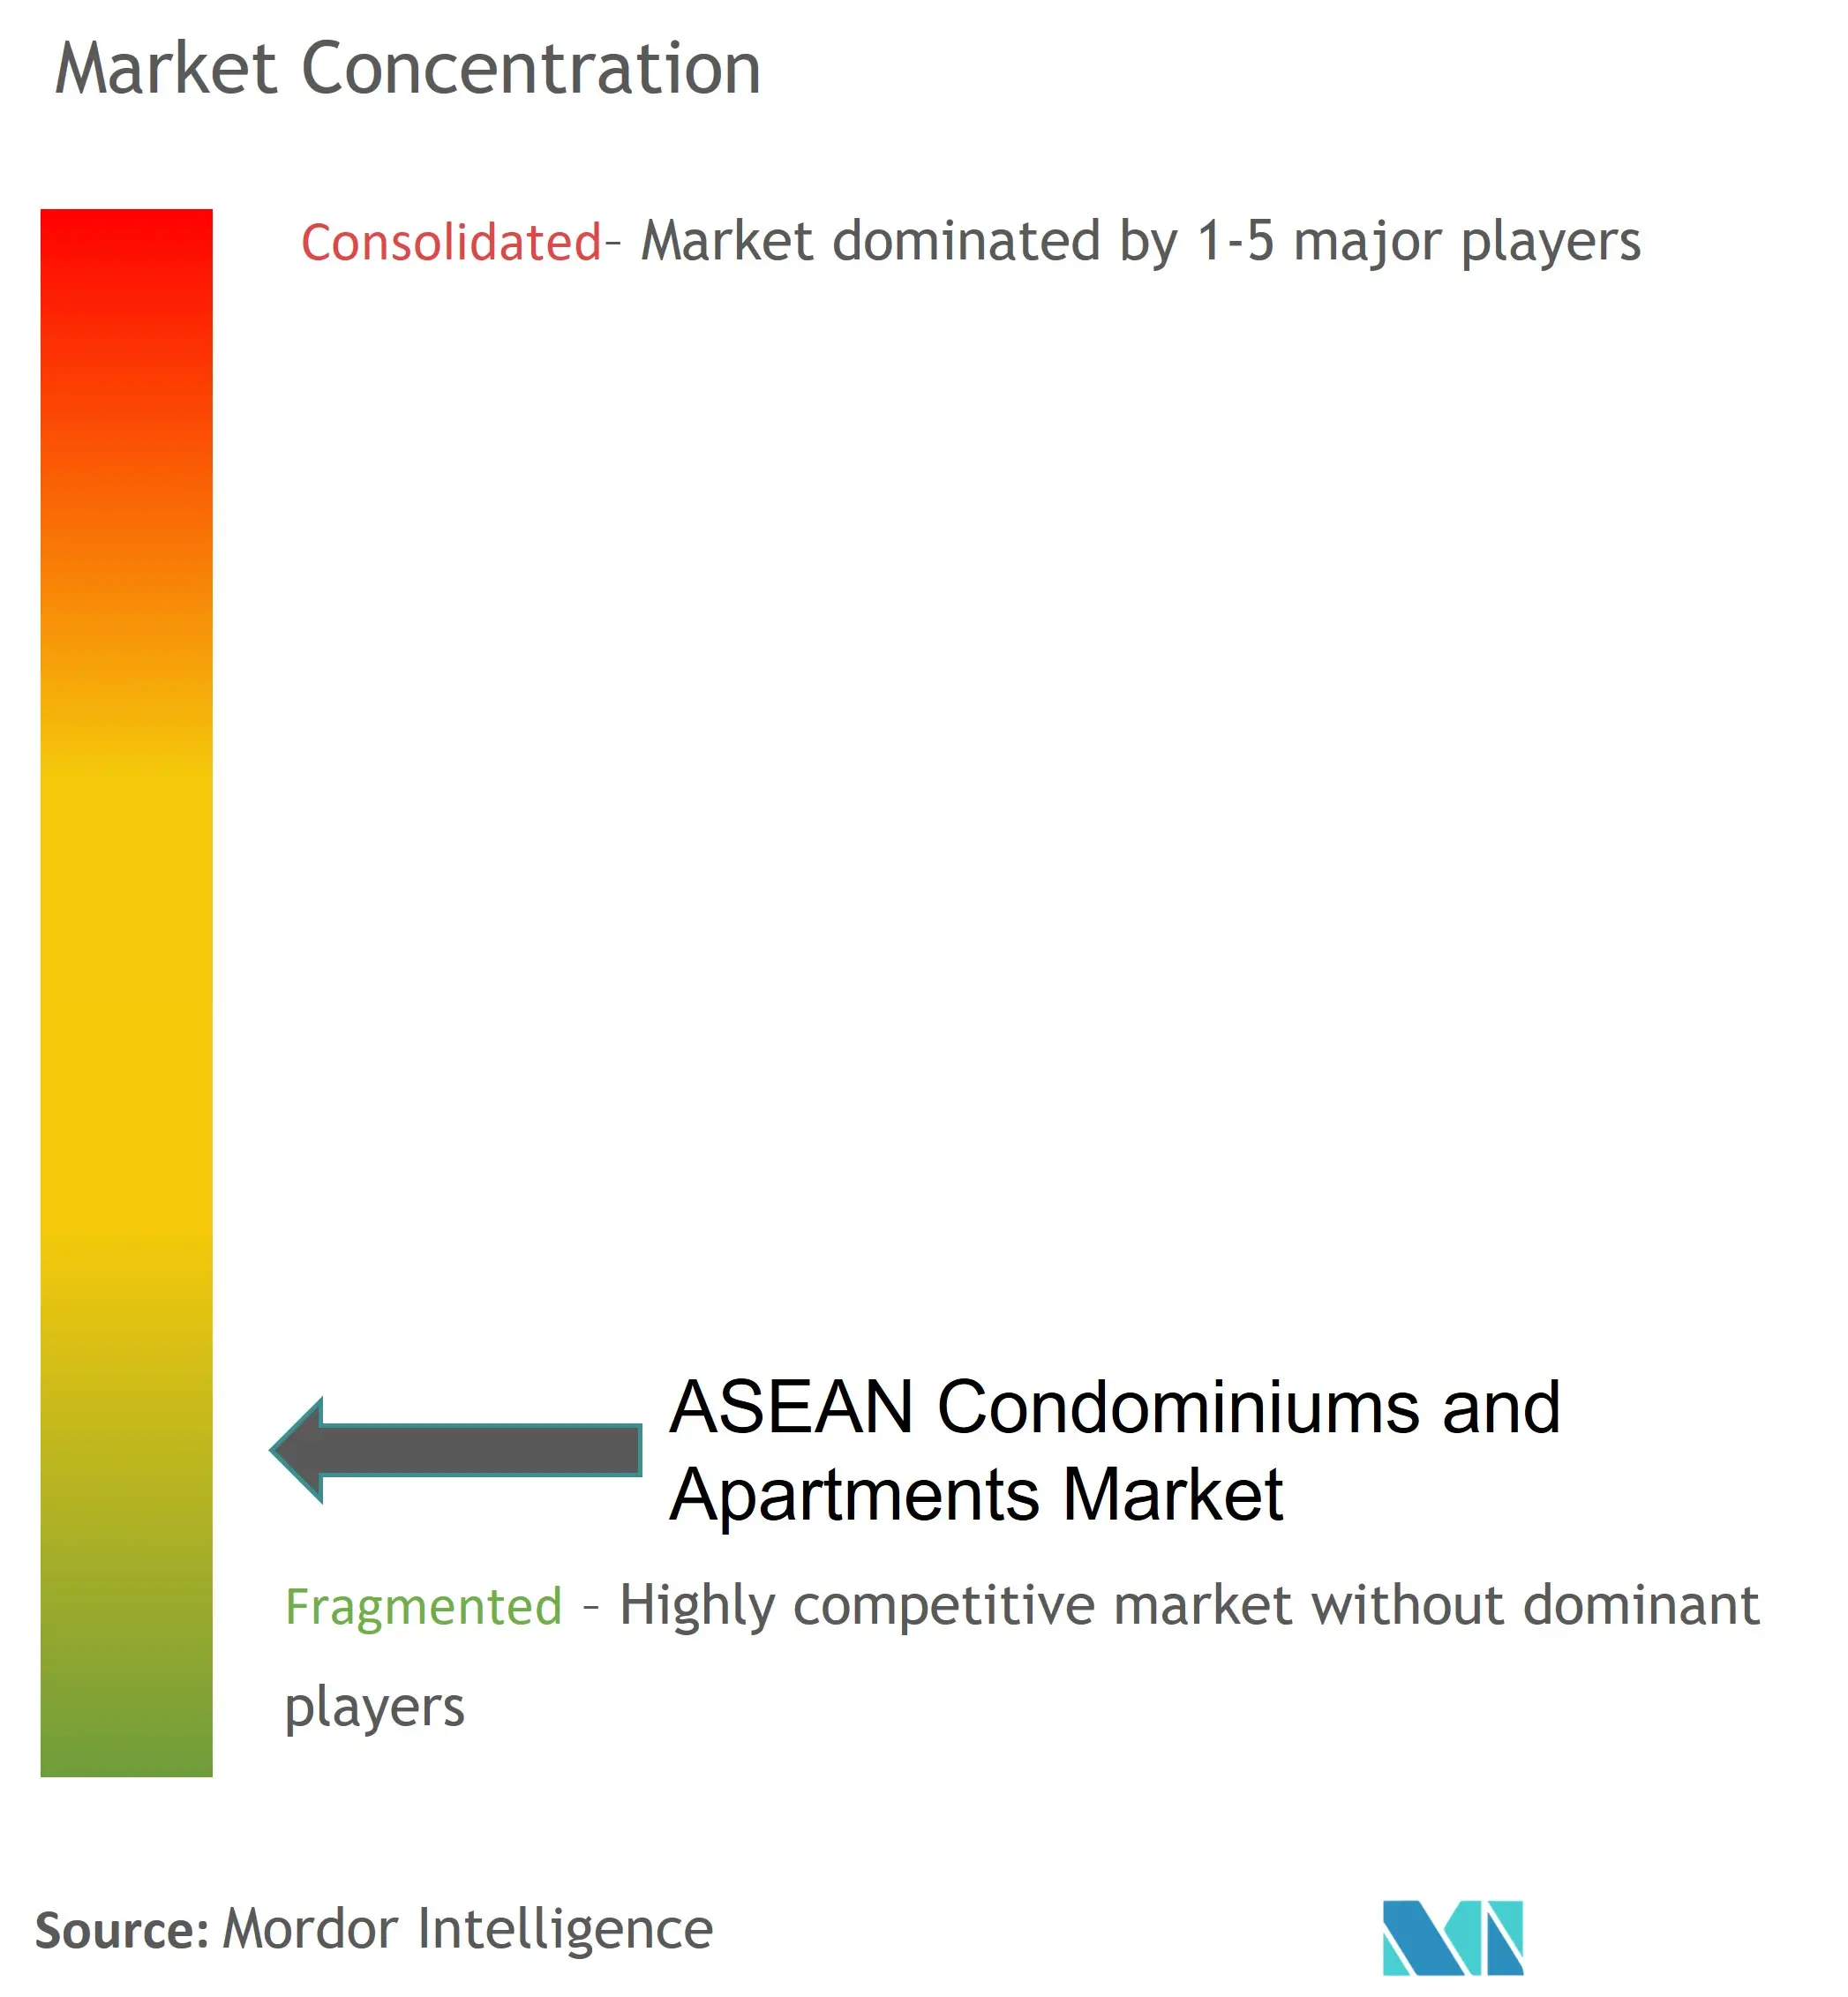 ASEAN Condominiums and Apartments Market Concentration